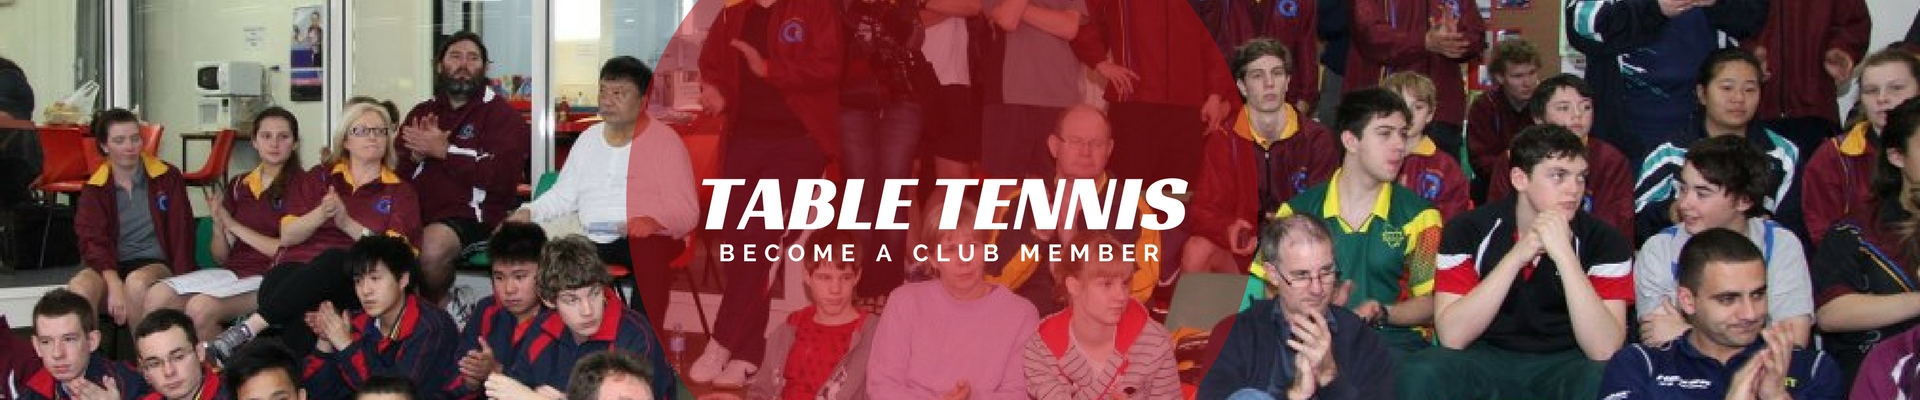 BECOME A club member